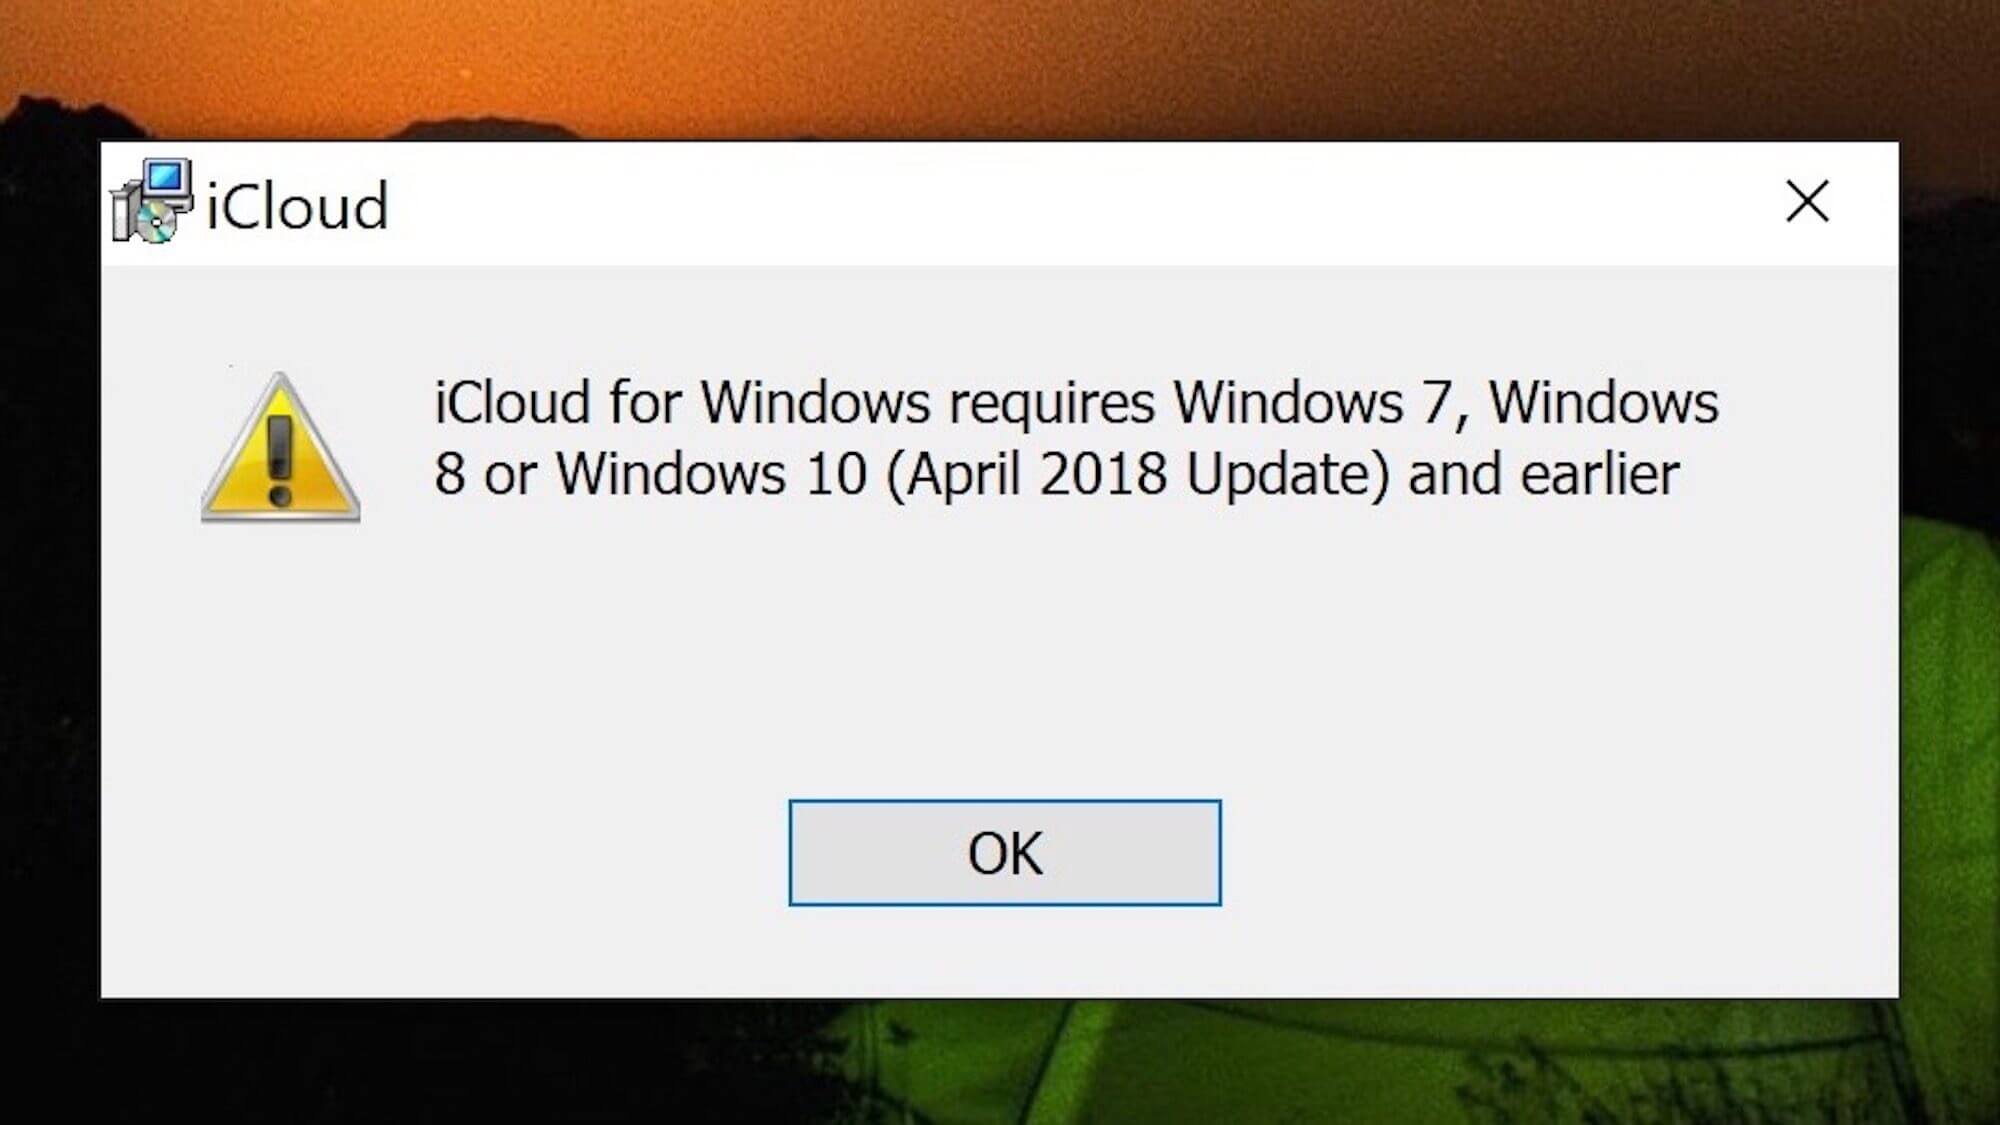 Windows april update